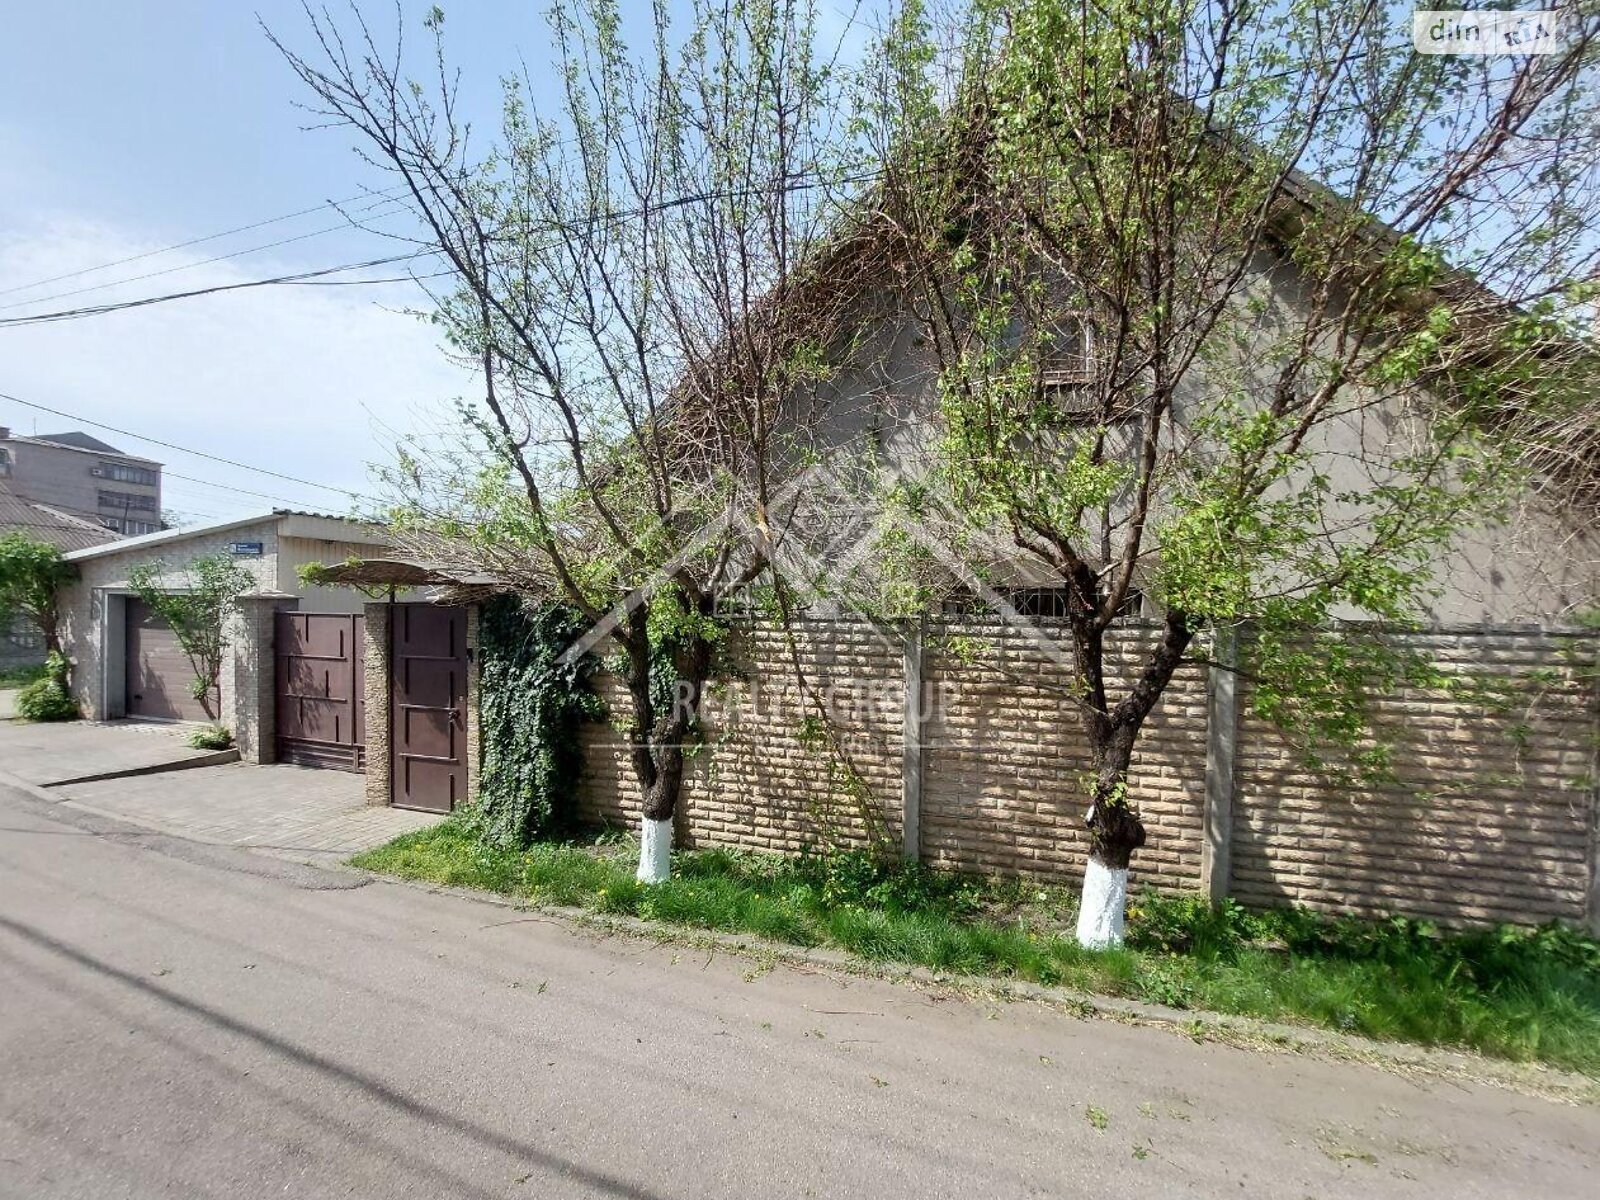 Продажа части дома в Кривом Роге, переулок Желтовского, район Кривой Рог, 5 комнат фото 1